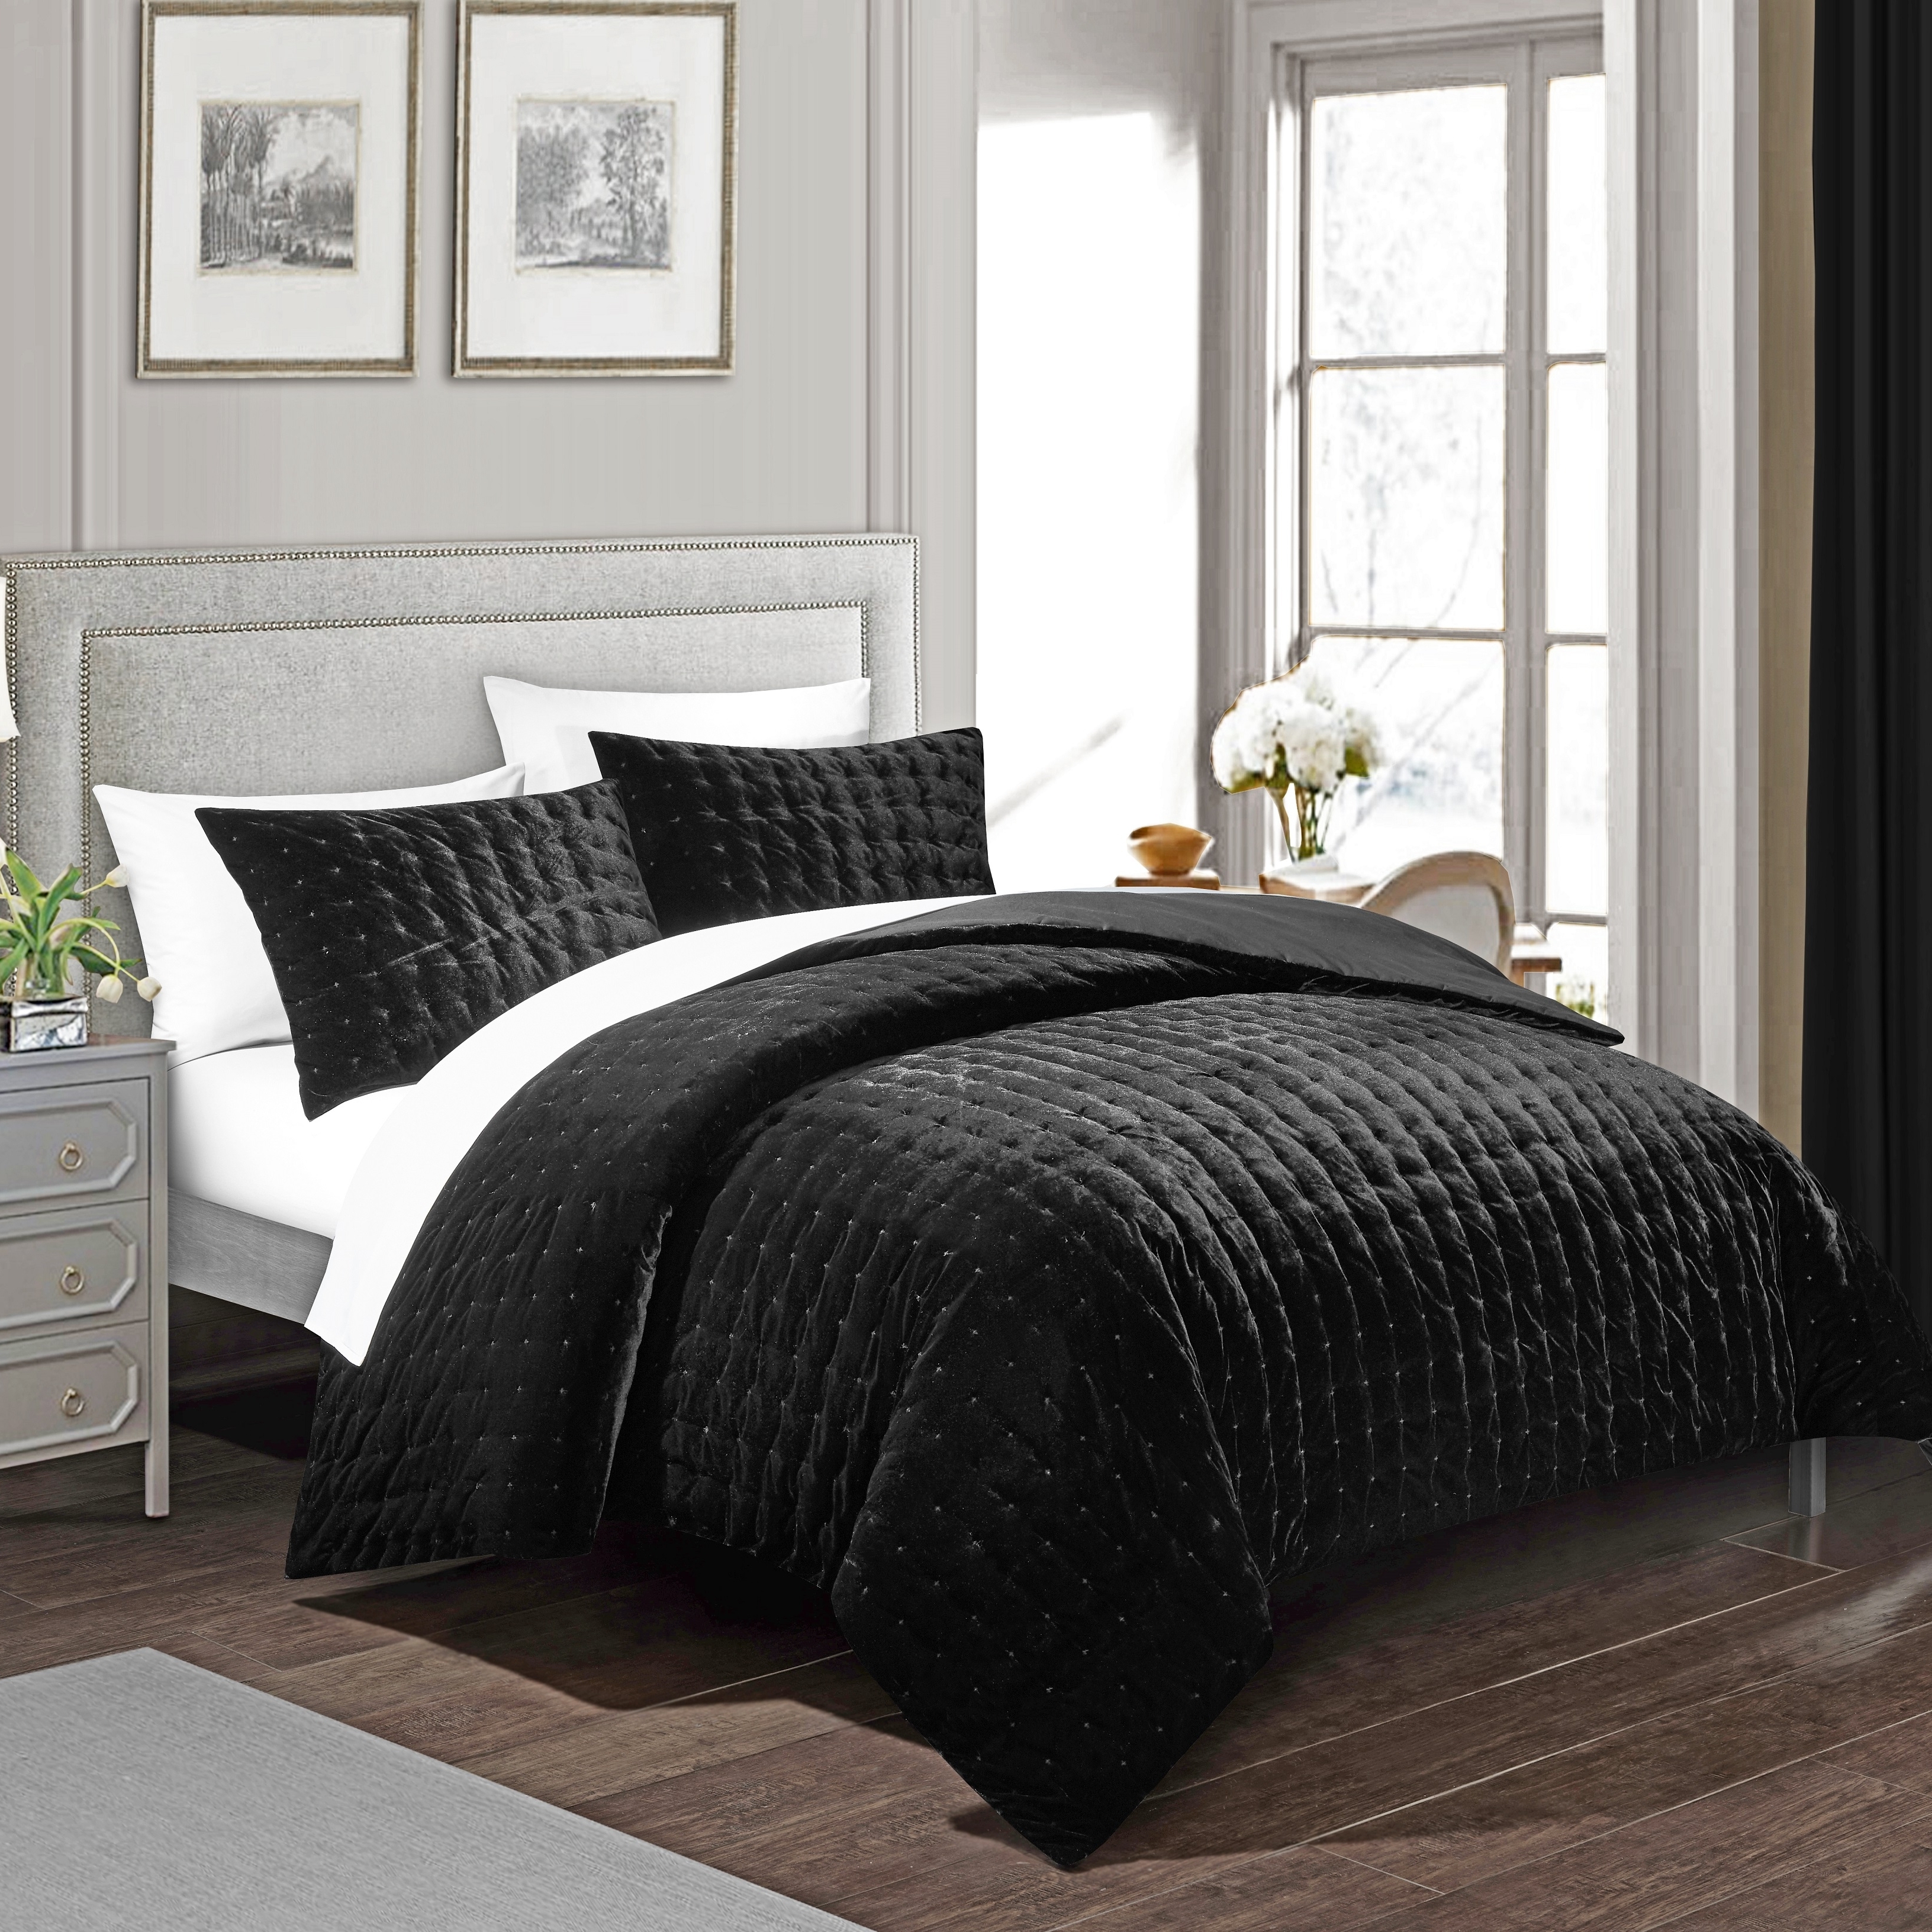 Chyna 3 Piece Comforter Set Luxurious Velvet Bedding - Black, Queen